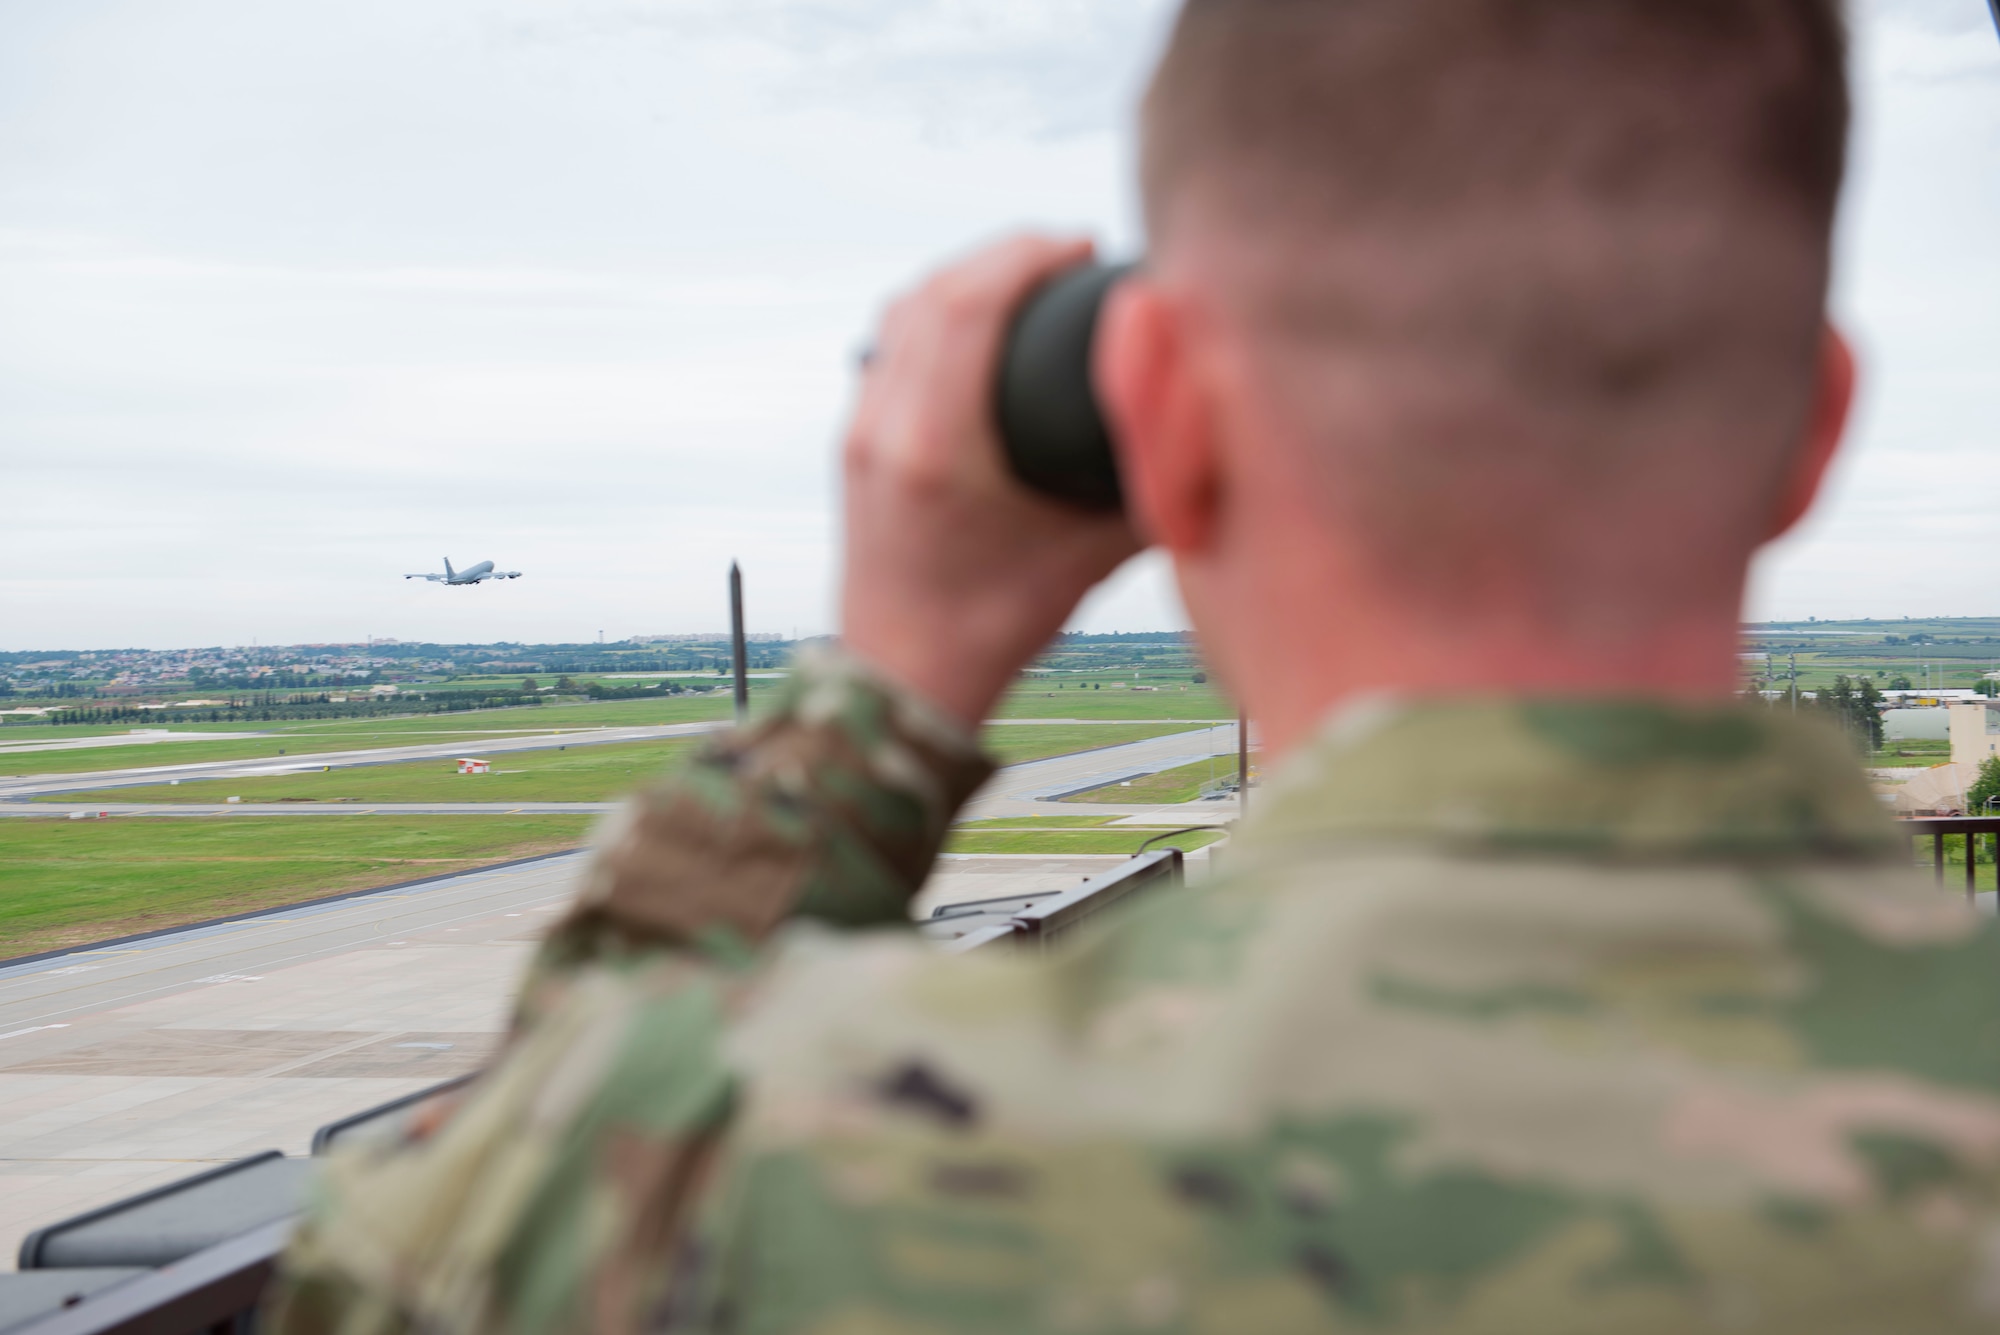 Photo of Airman looking at a plane through binoculars